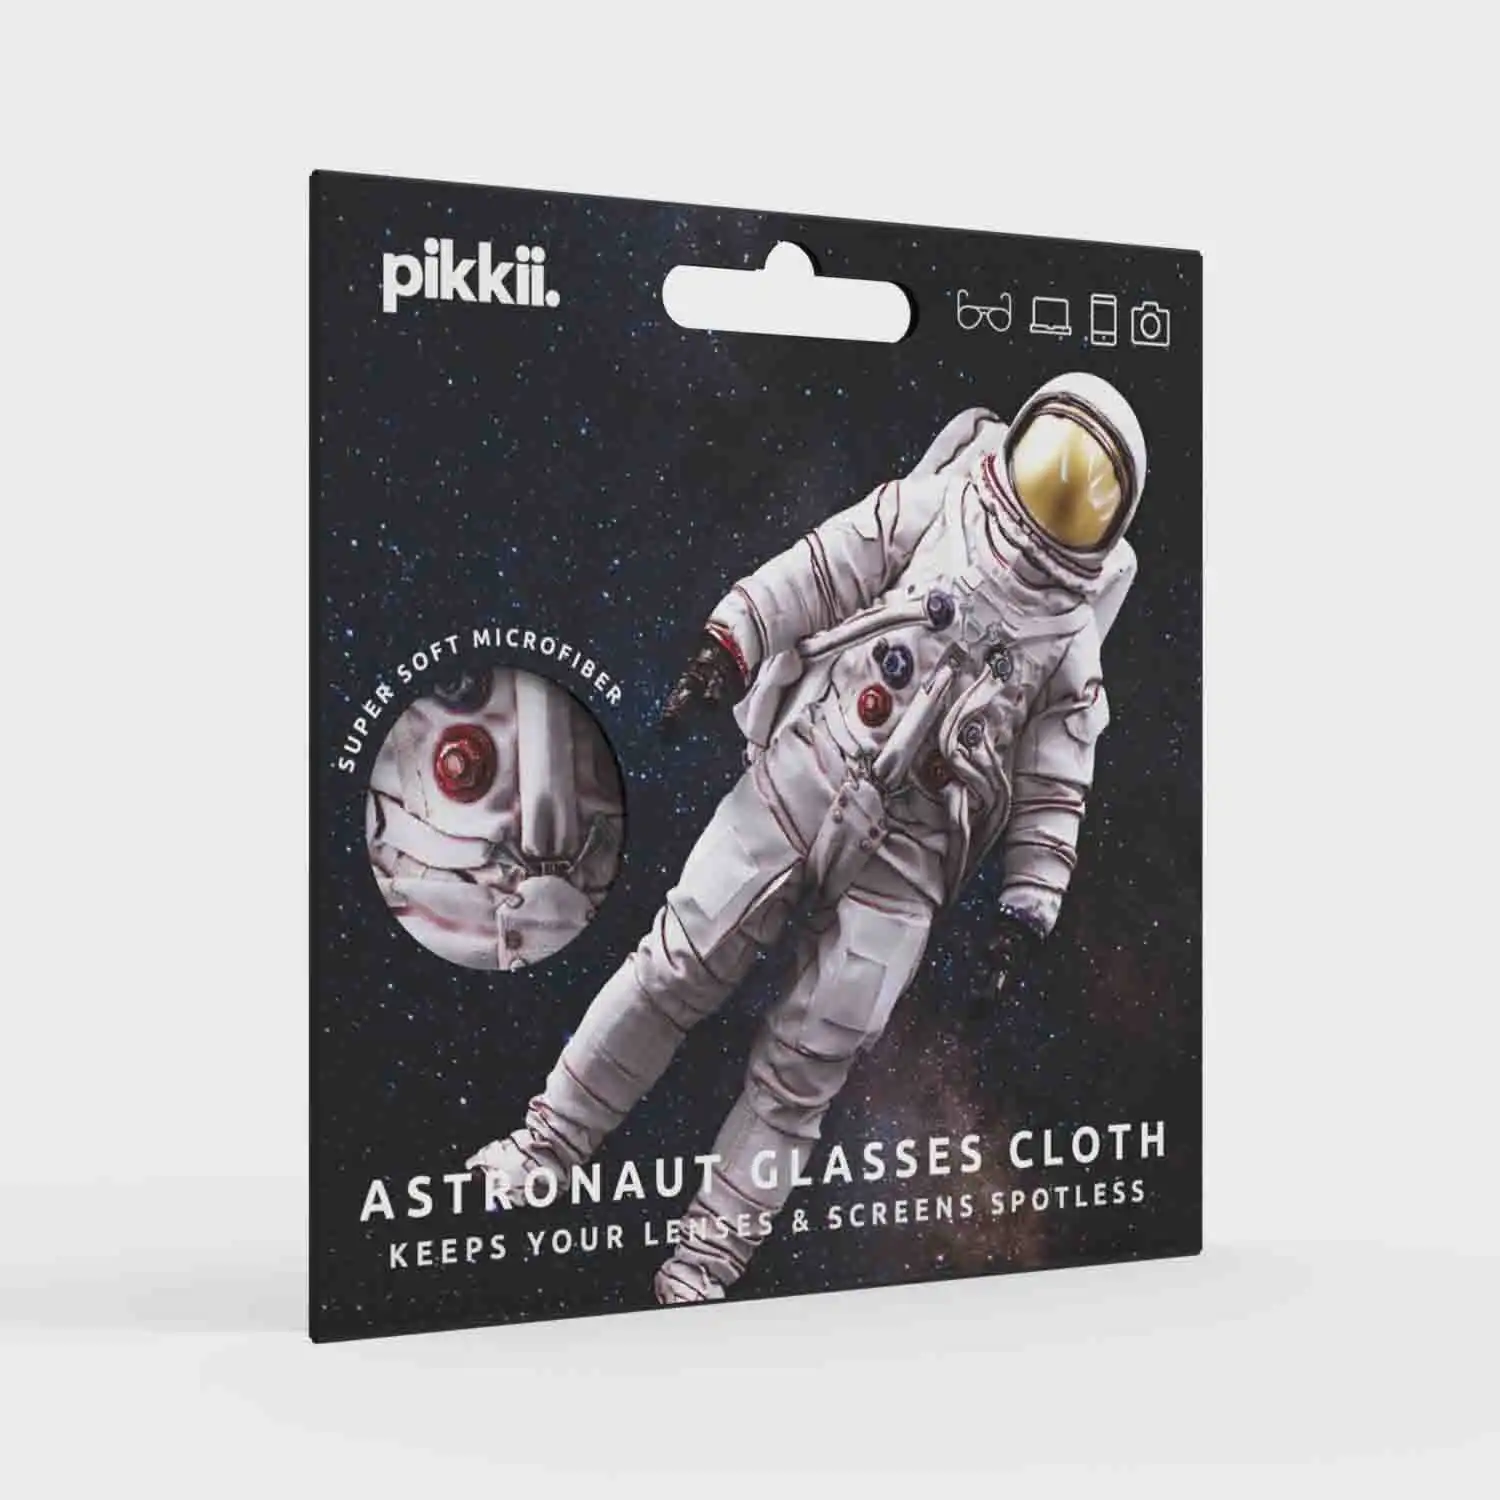 Fun Micofiber Cloth - Astronaut